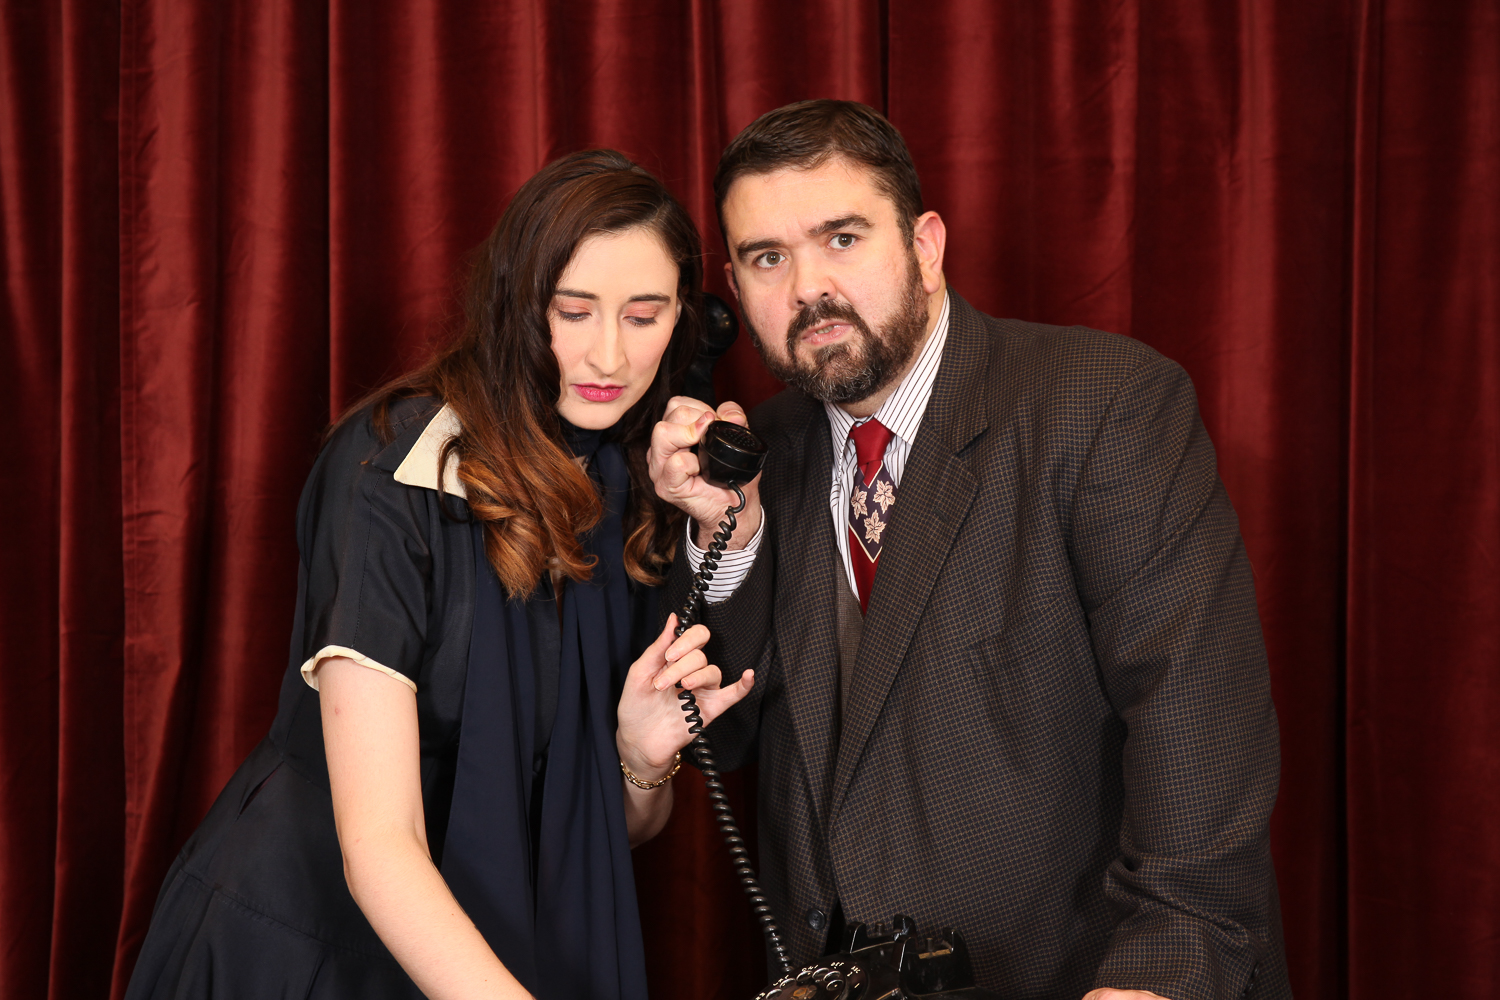 Katelyn Hamilton & Dan Ruiz Salvatura, as Mary & George Bailey. Photo credit: Dale Sutton